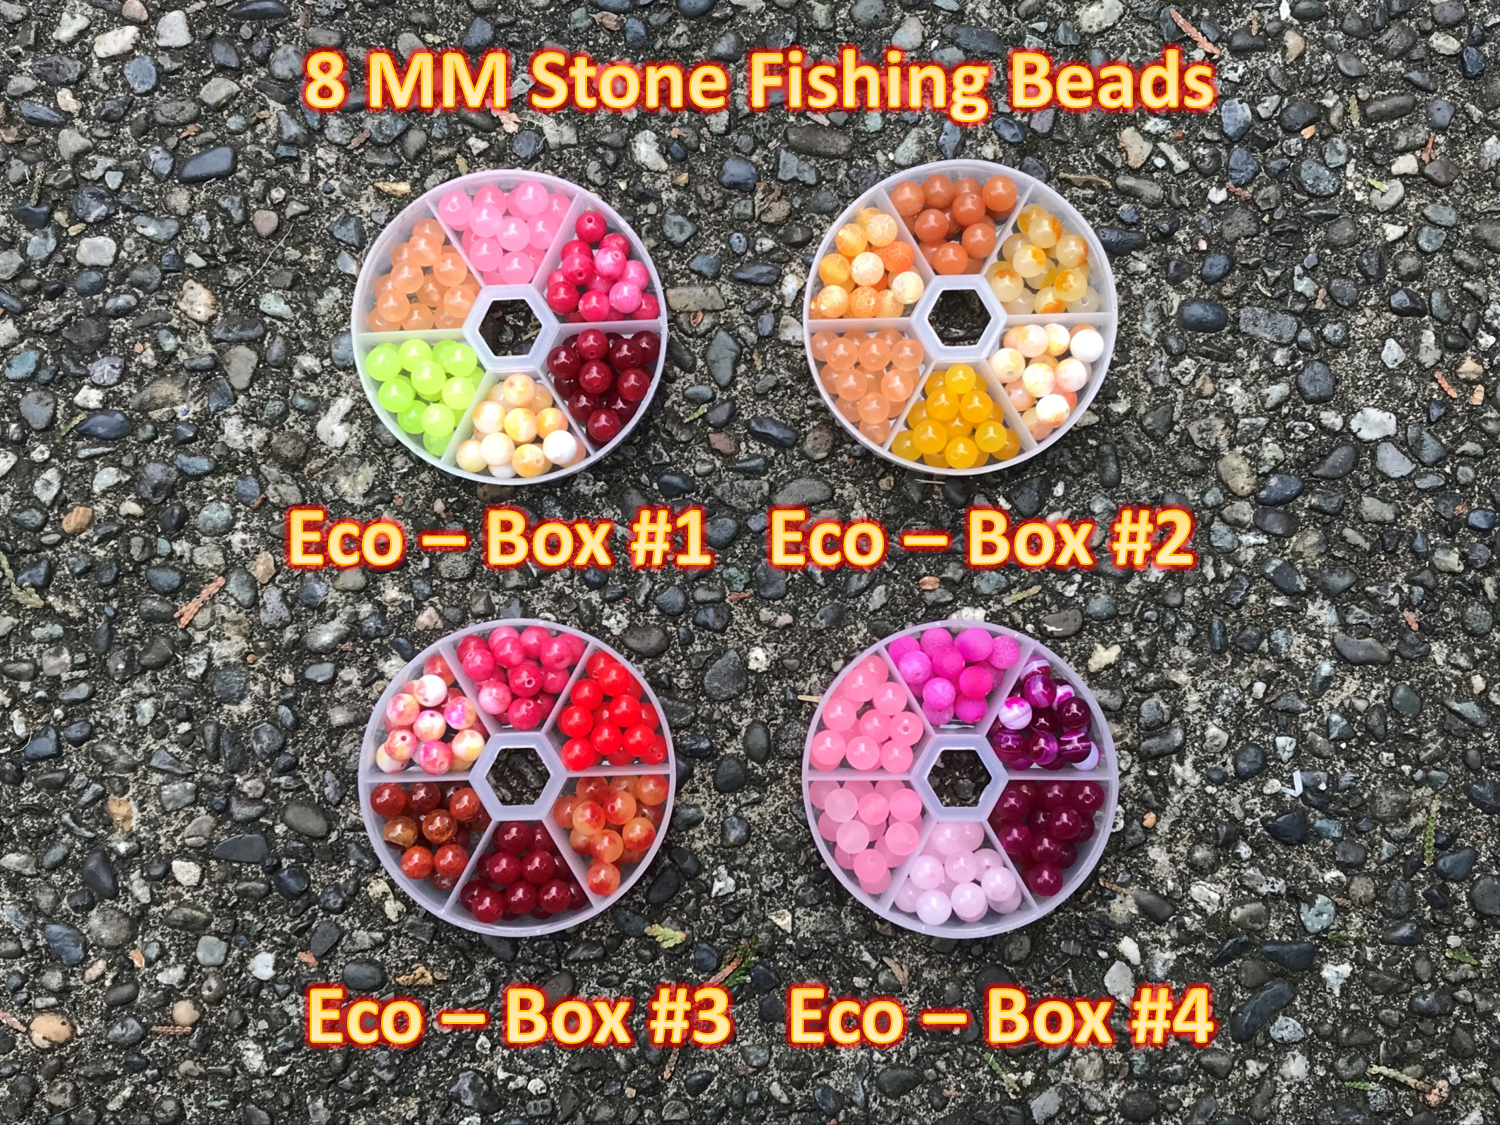 https://stonecoldbeads.com/wp-content/uploads/2019/01/8mm-fishing-bead-wheels.png